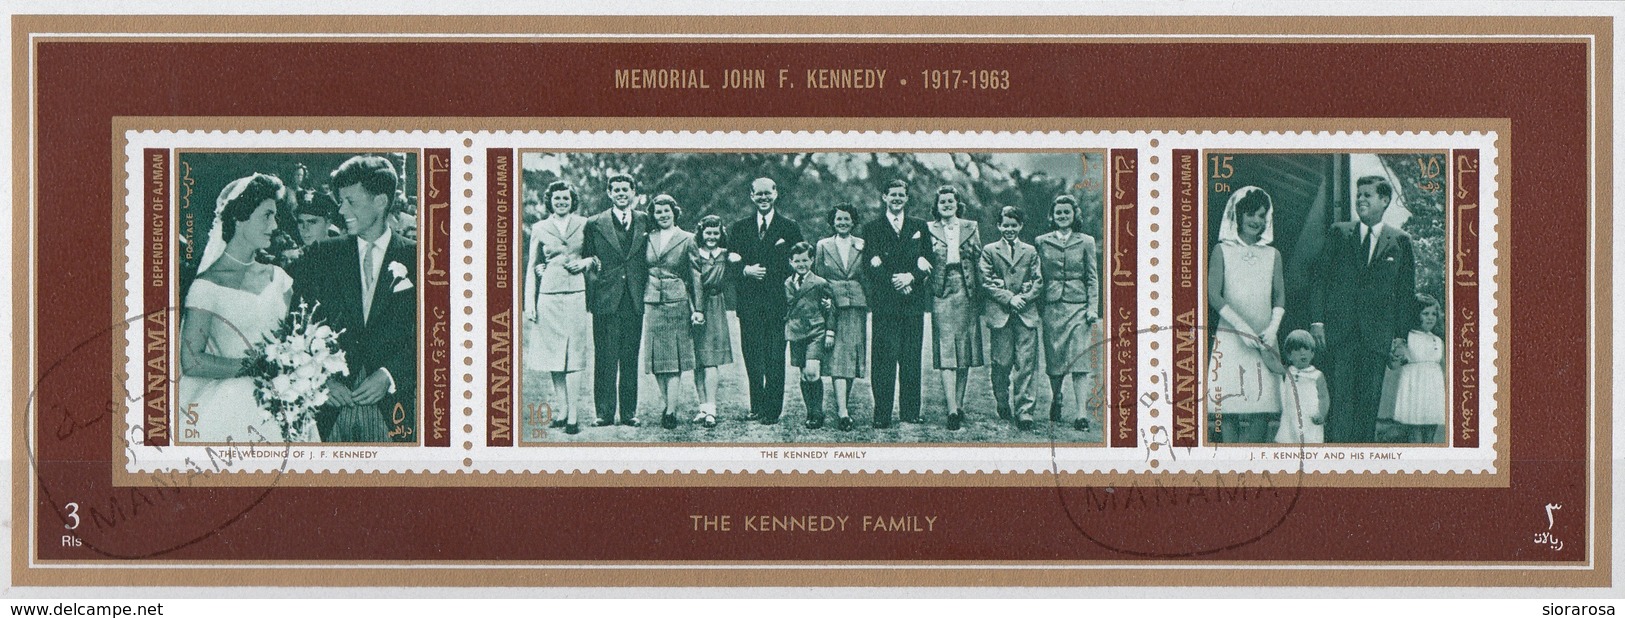 Manama 1971 Mi. 800-801-802 Memorial J. F. Kennedy Family Strip Imperf. Sheet CTO - Manama